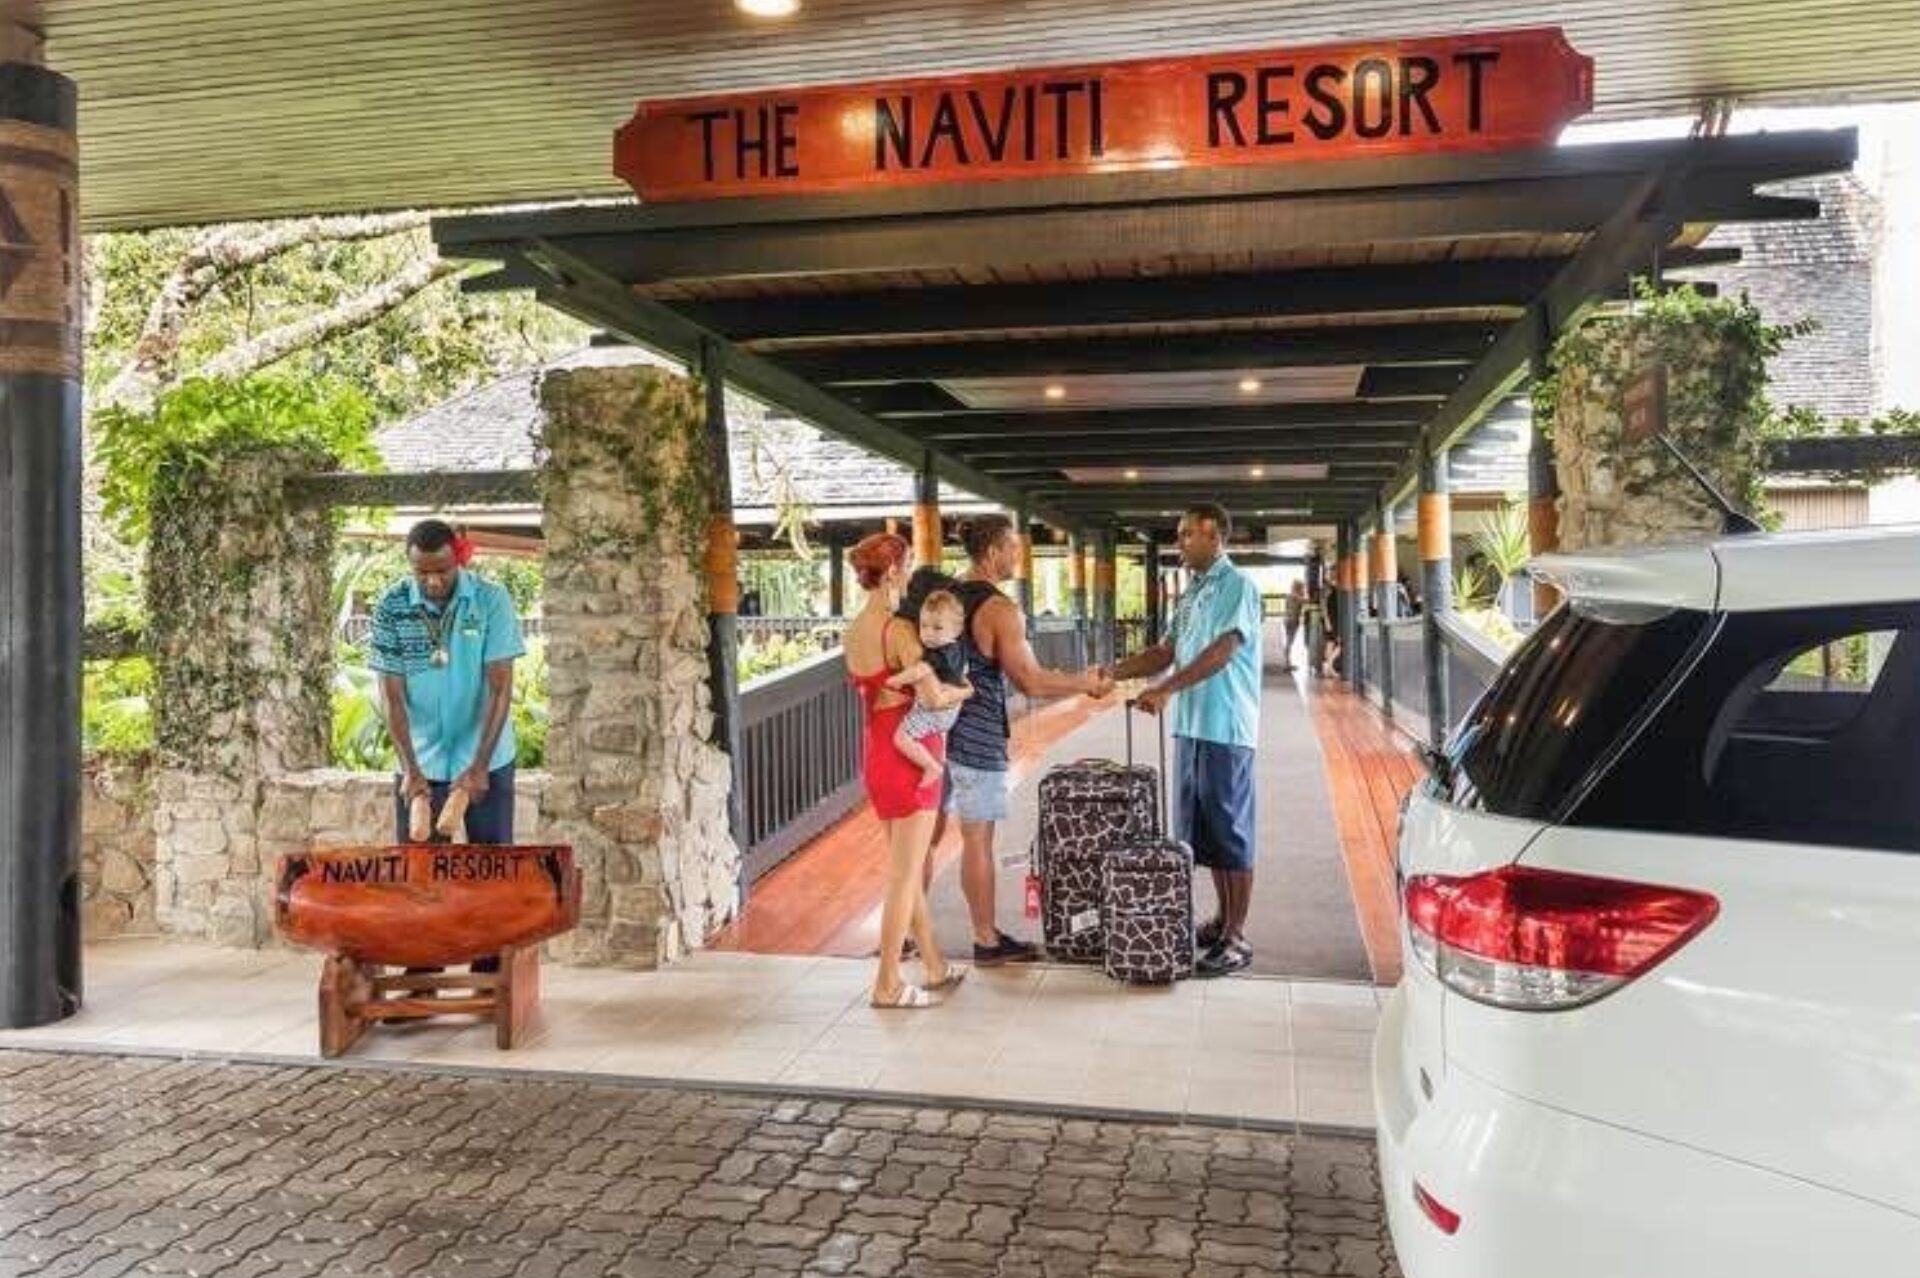 The Naviti Resort in Fiji for All-Inclusive Family Fun!